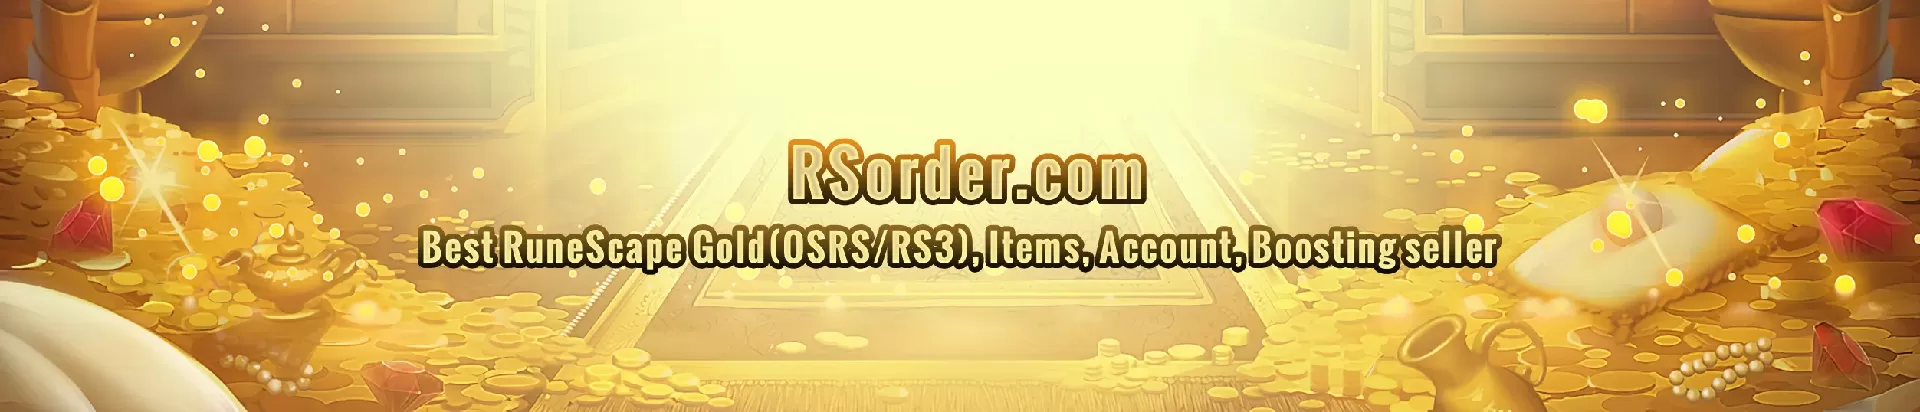 RSorder.com | Best RuneScape Gold(OSRS/RS3), Items